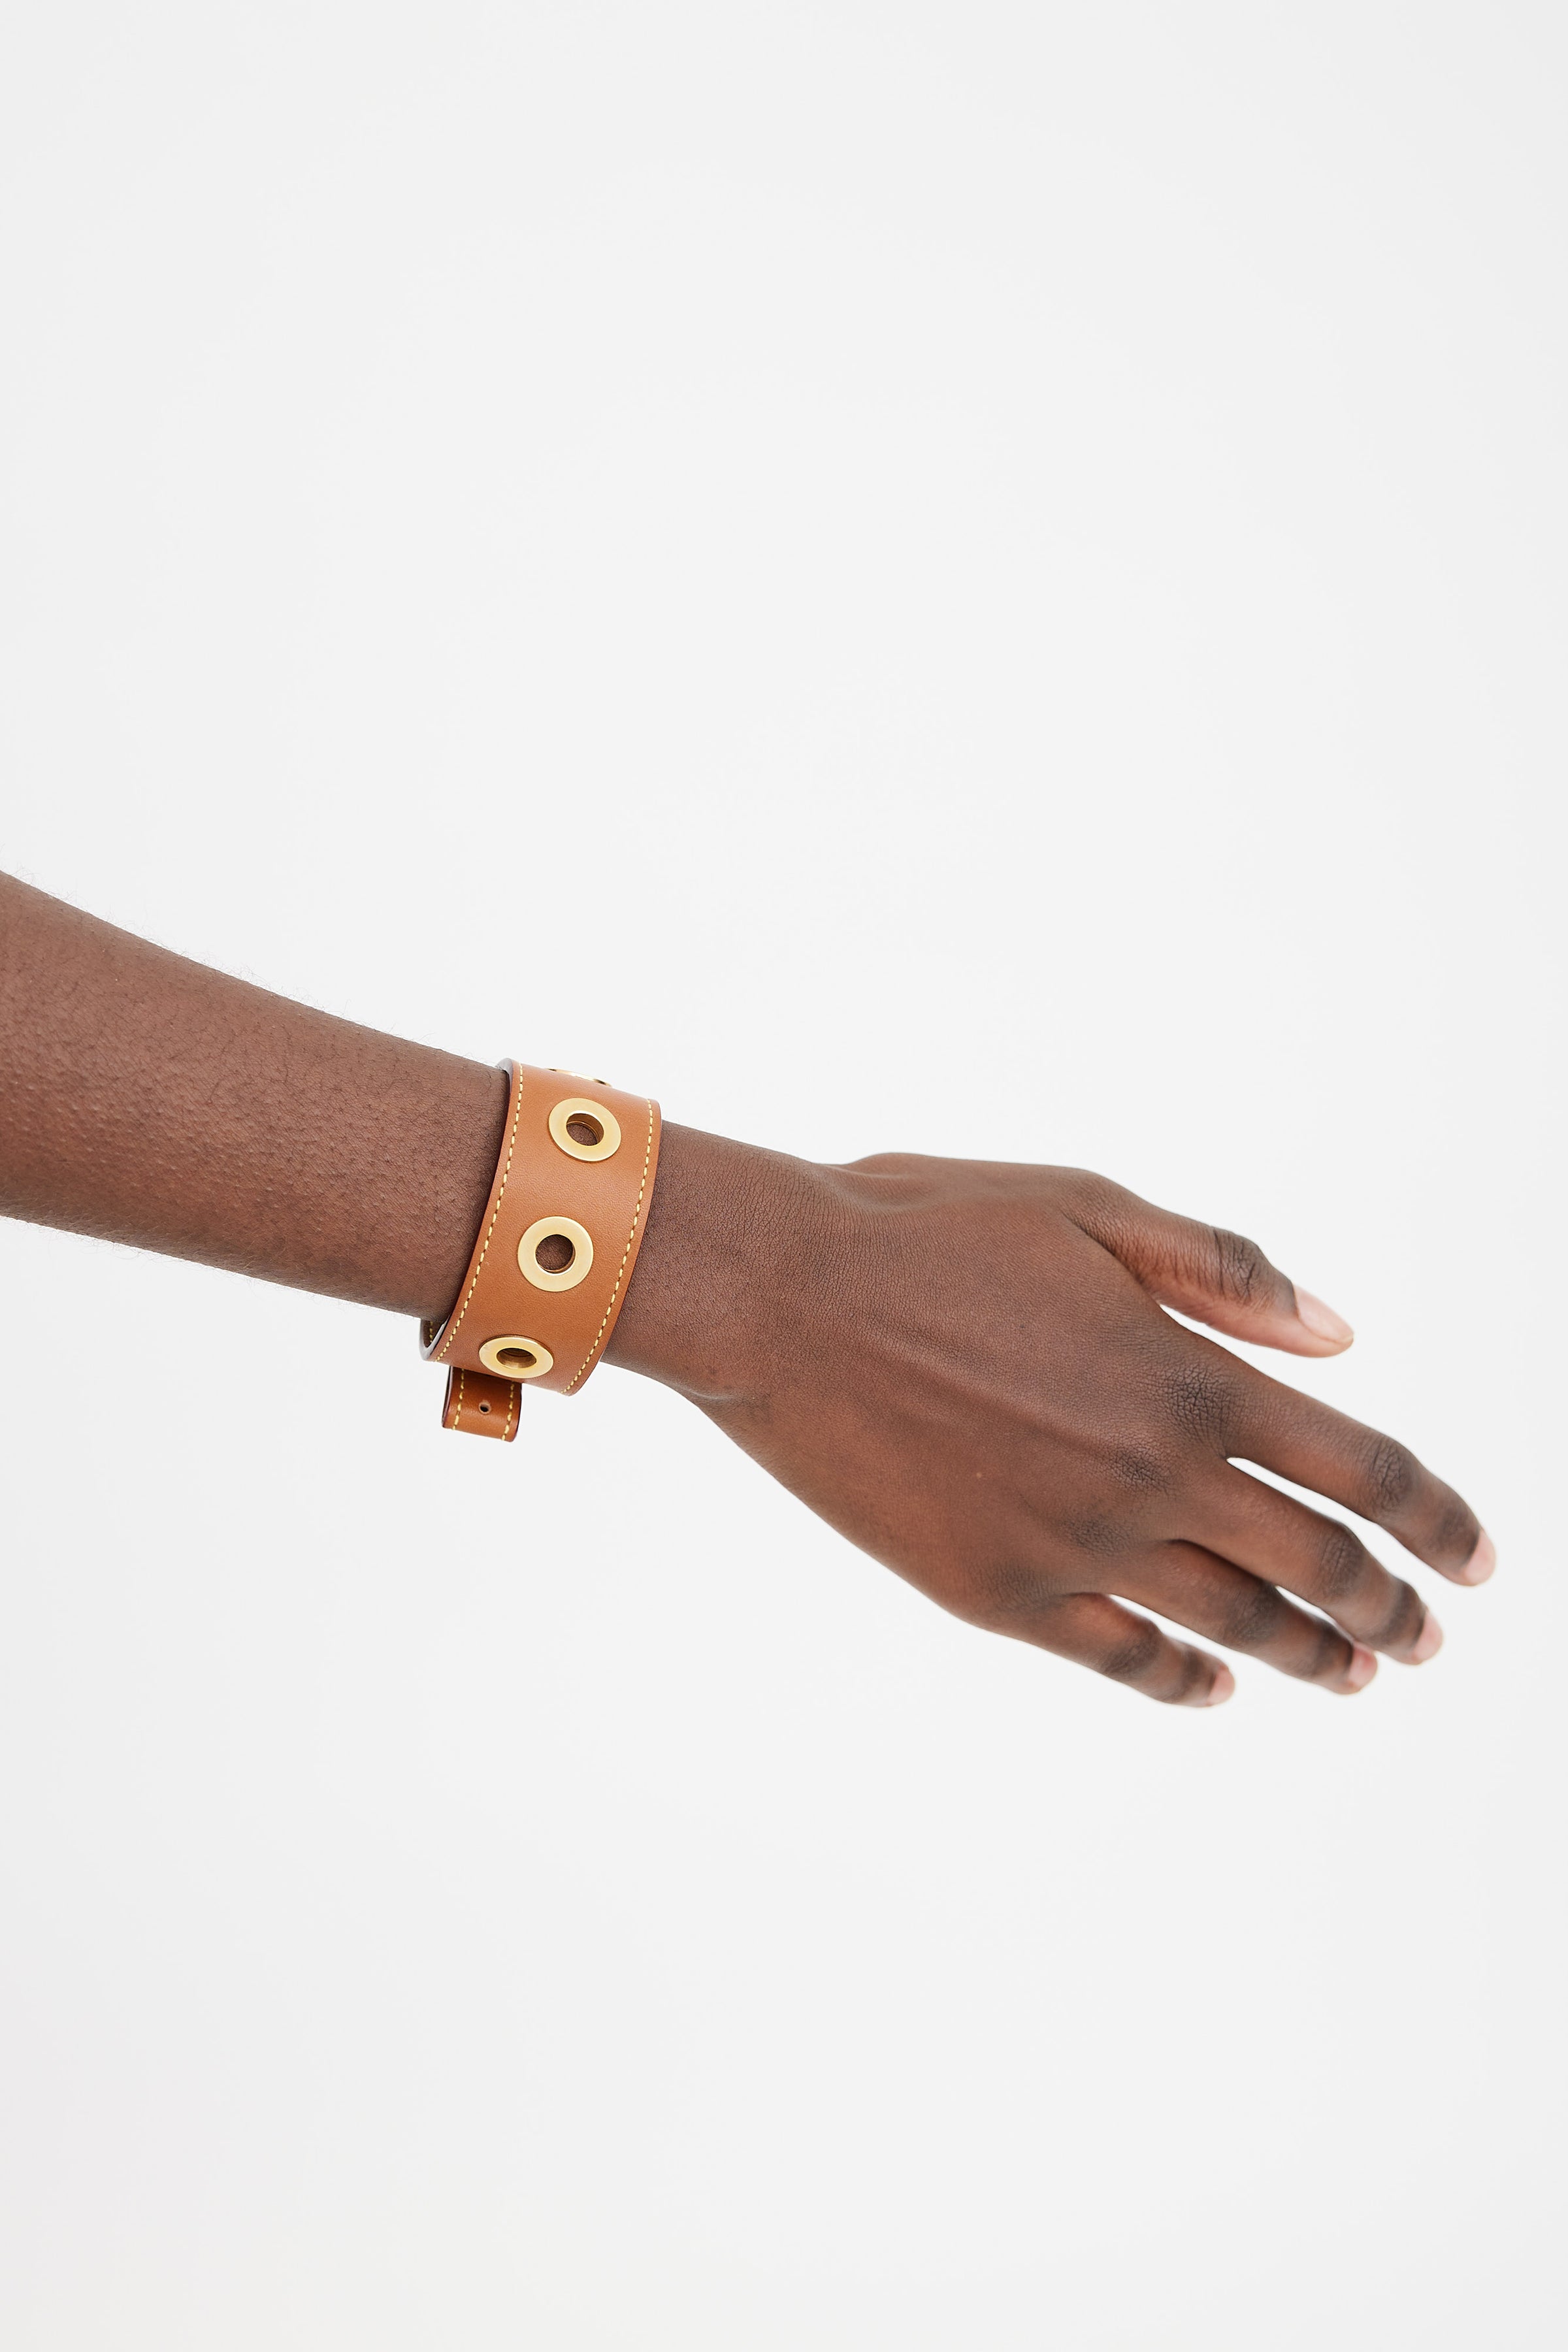 Louis Vuitton leather bracelet Suhari M91847 Double choker gold studded  brown